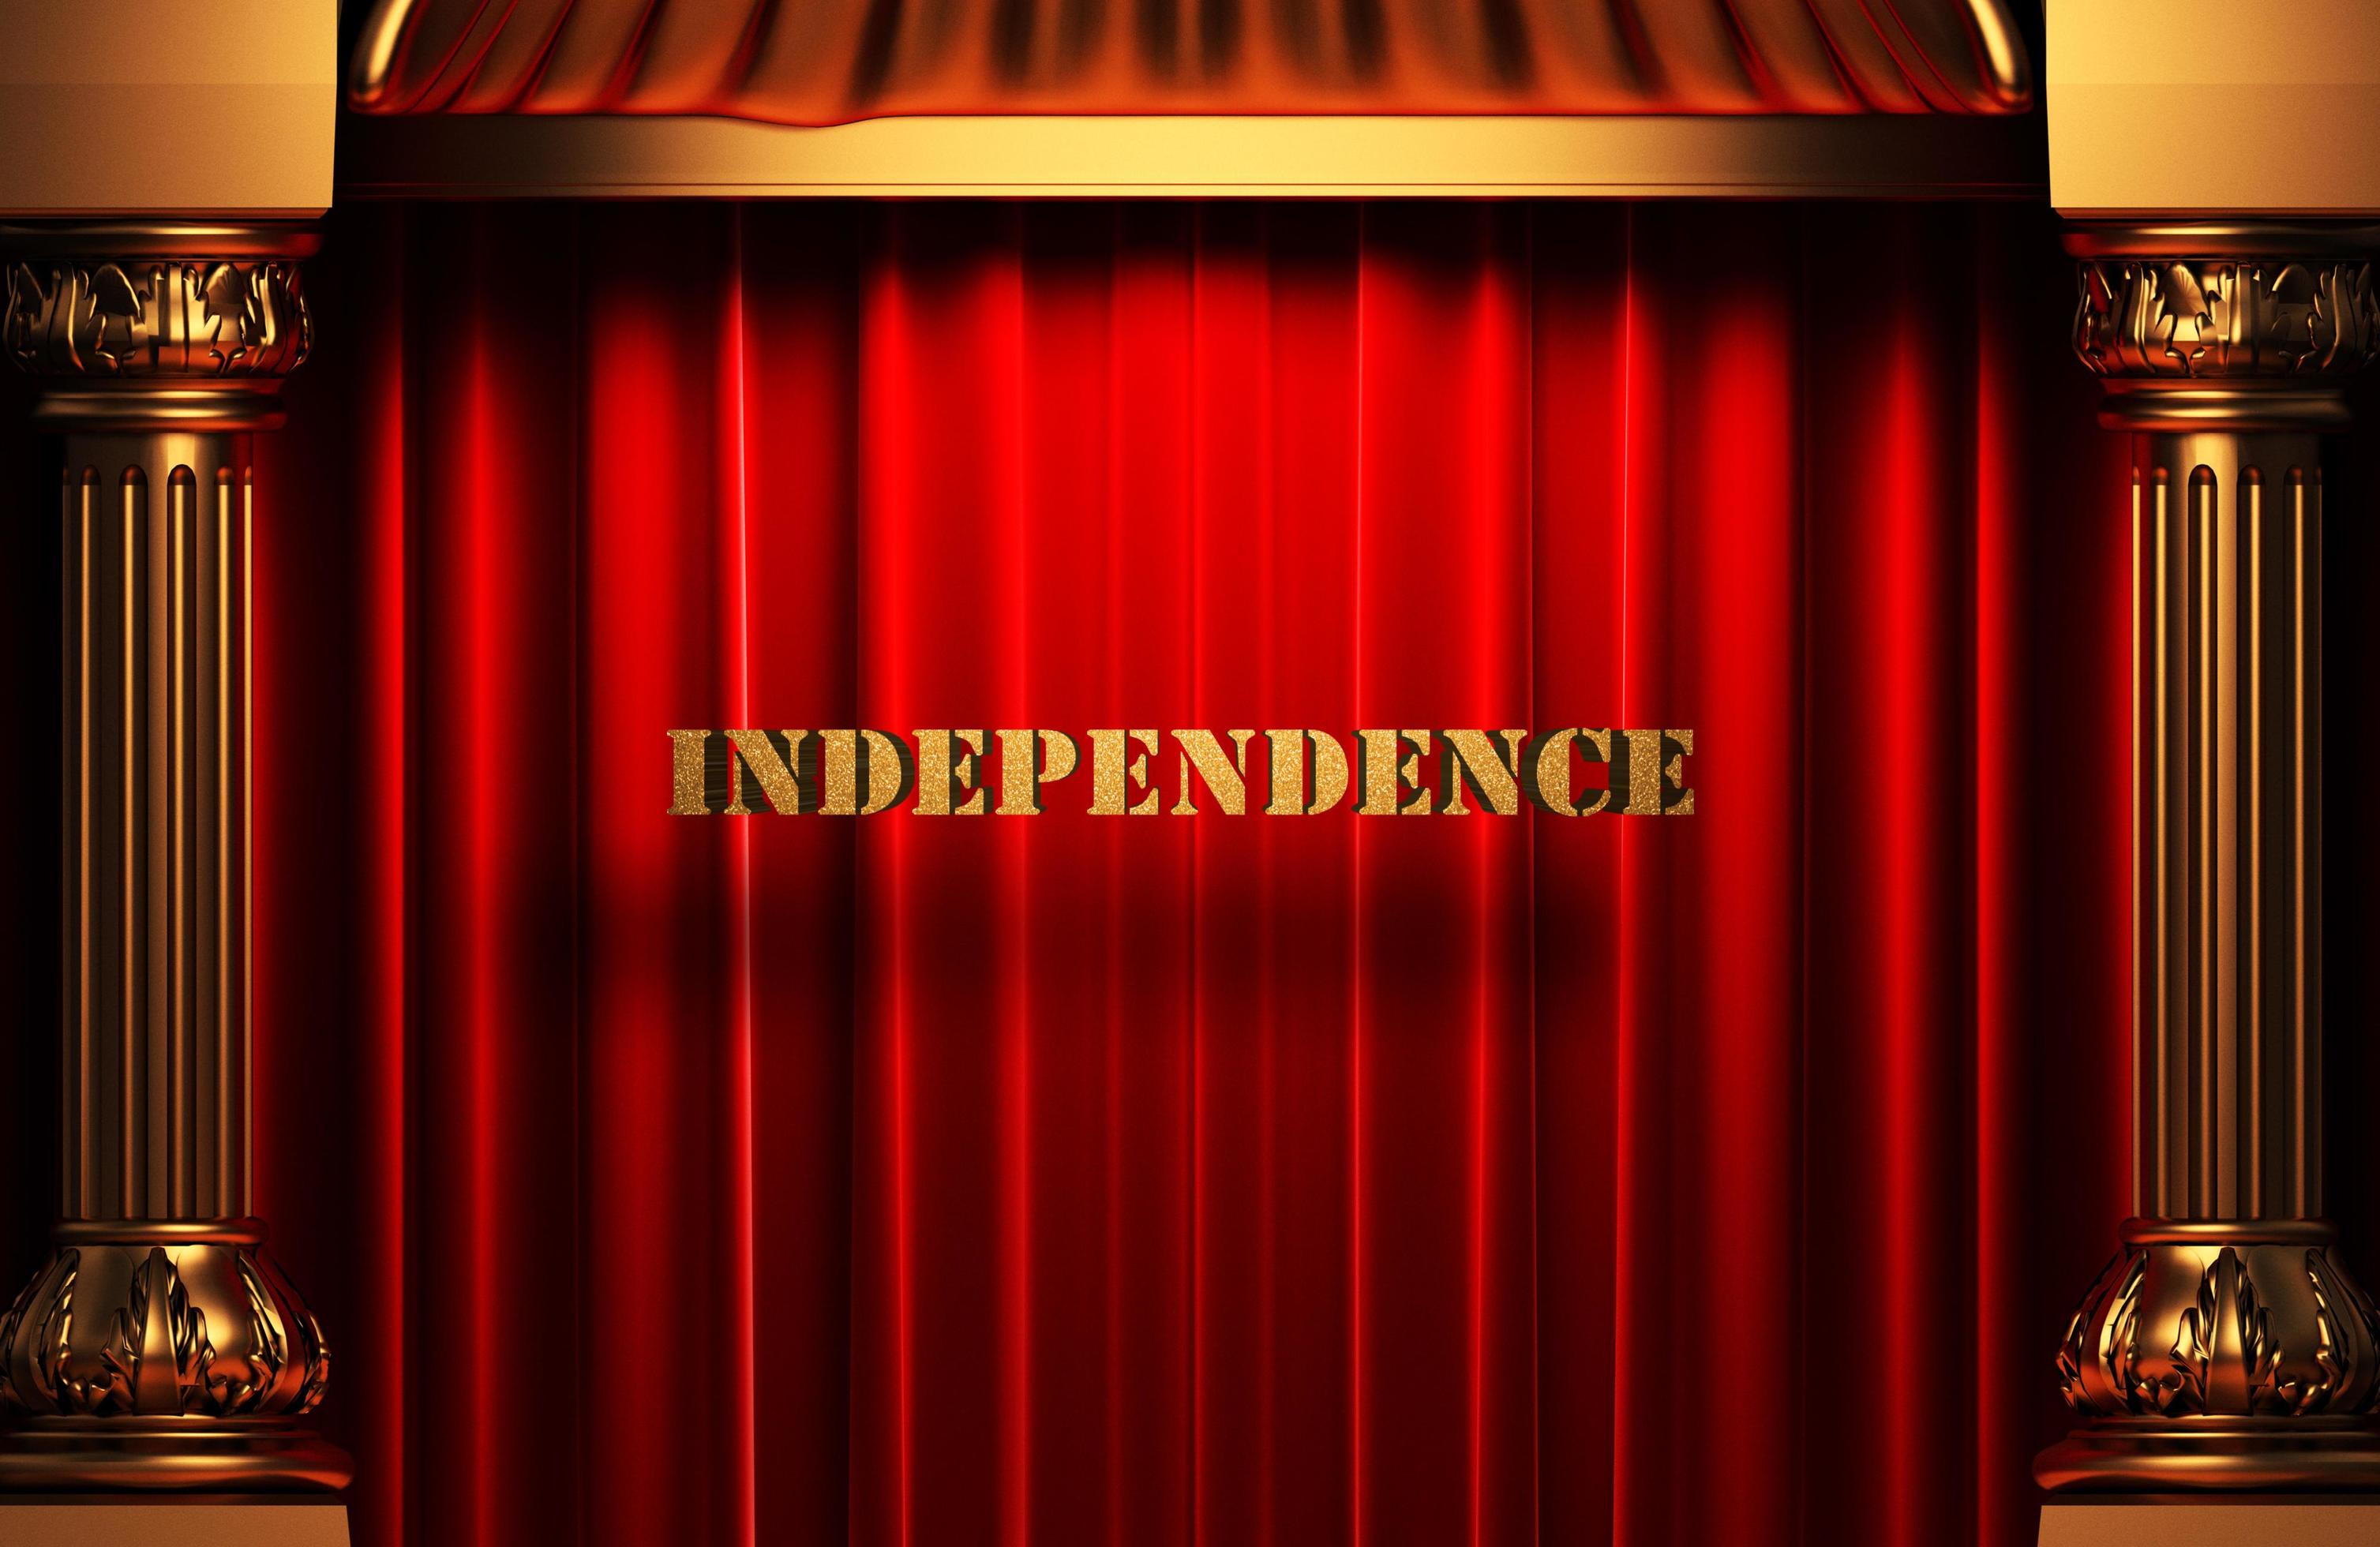 palabra dorada independencia en cortina roja foto